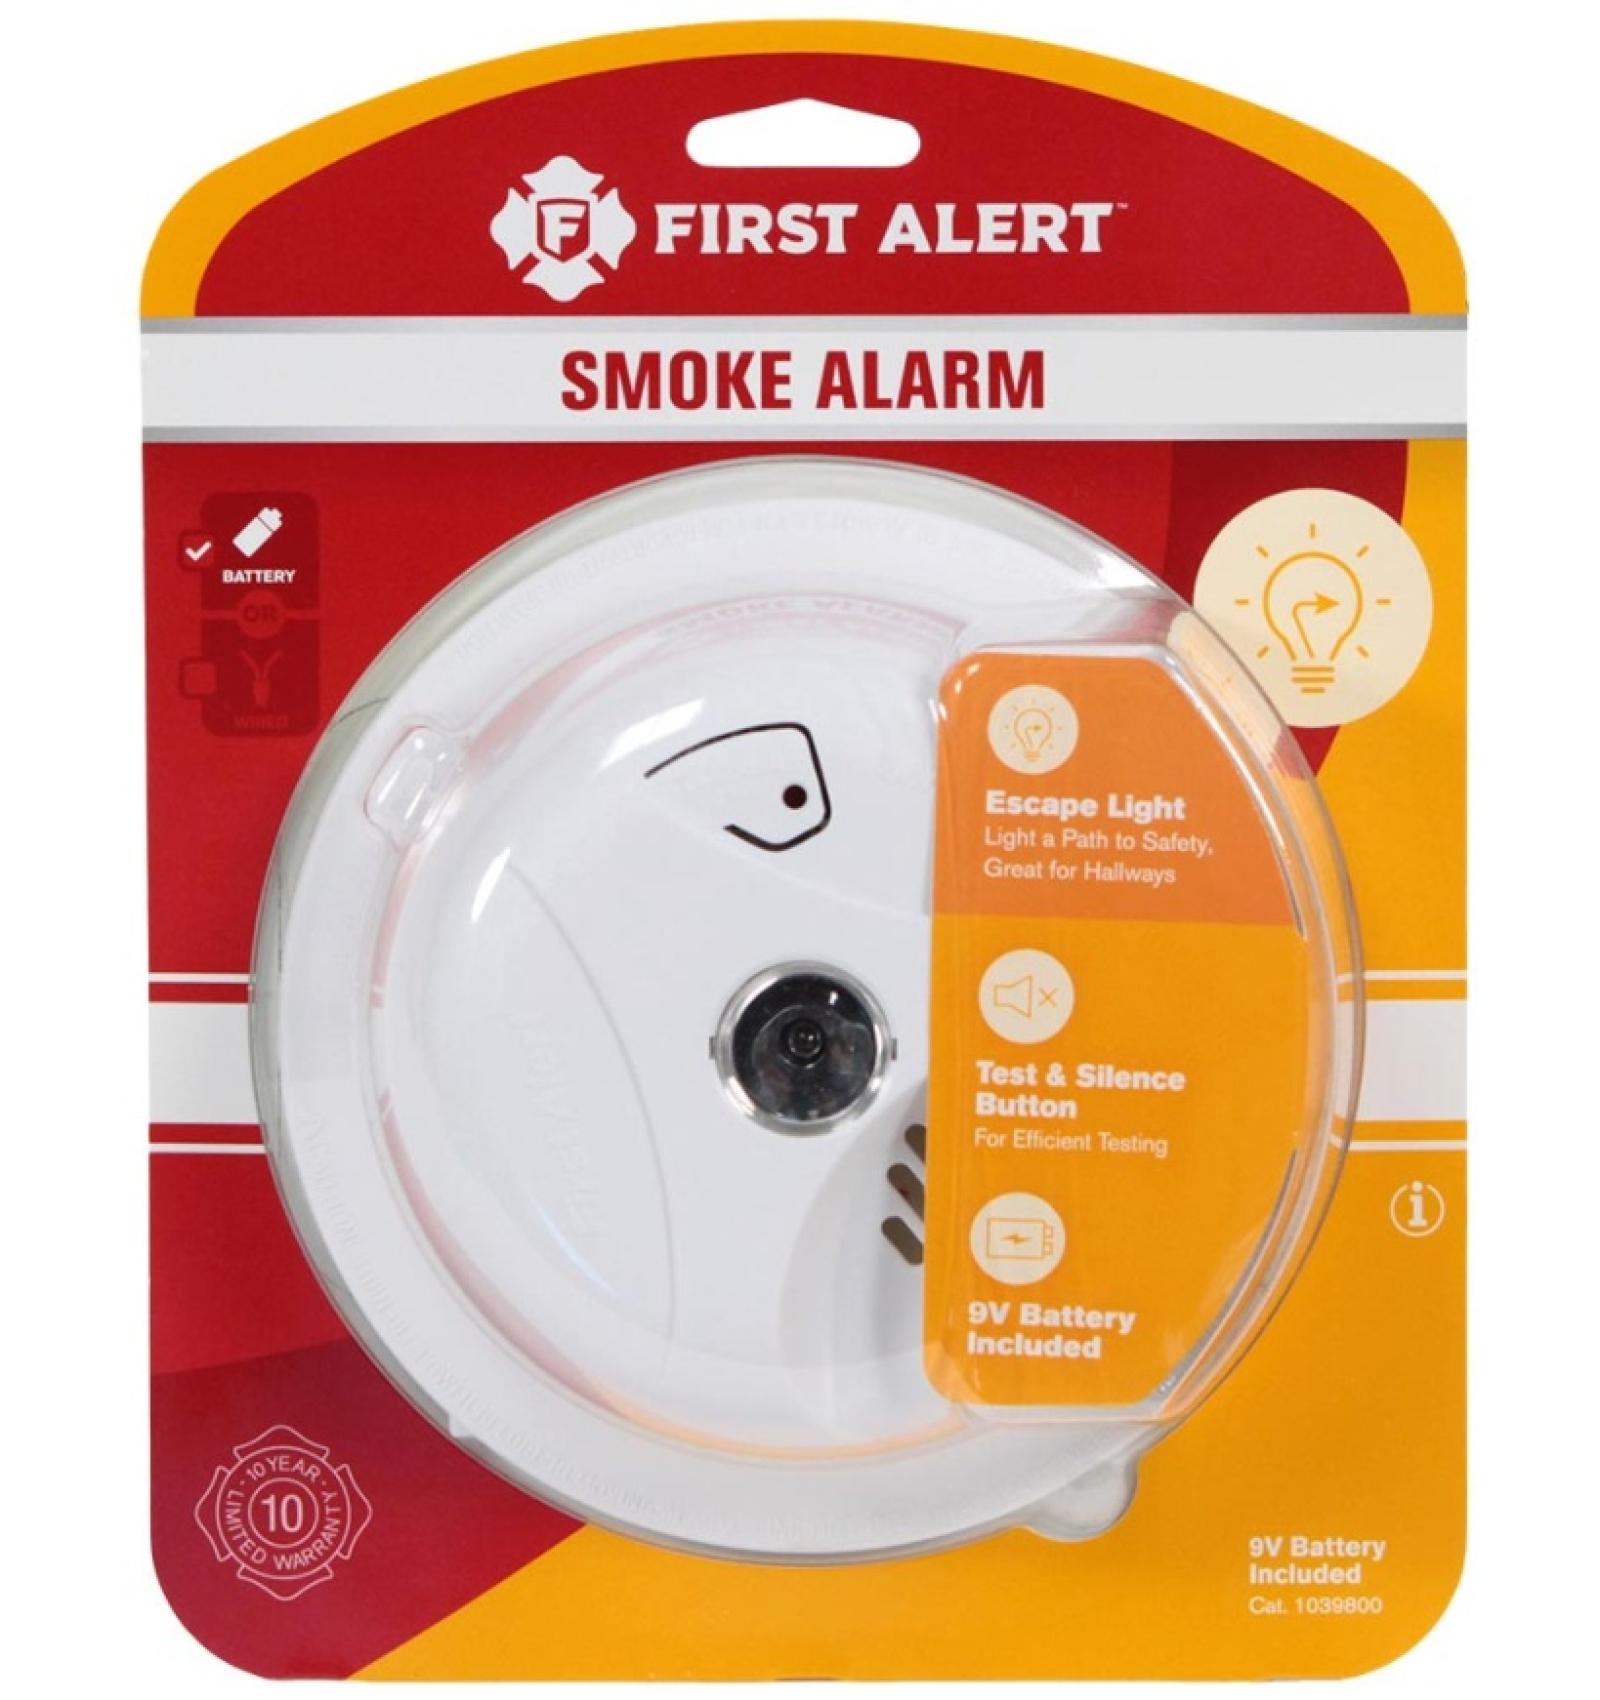 First Alert Escape Light Smoke Alarm